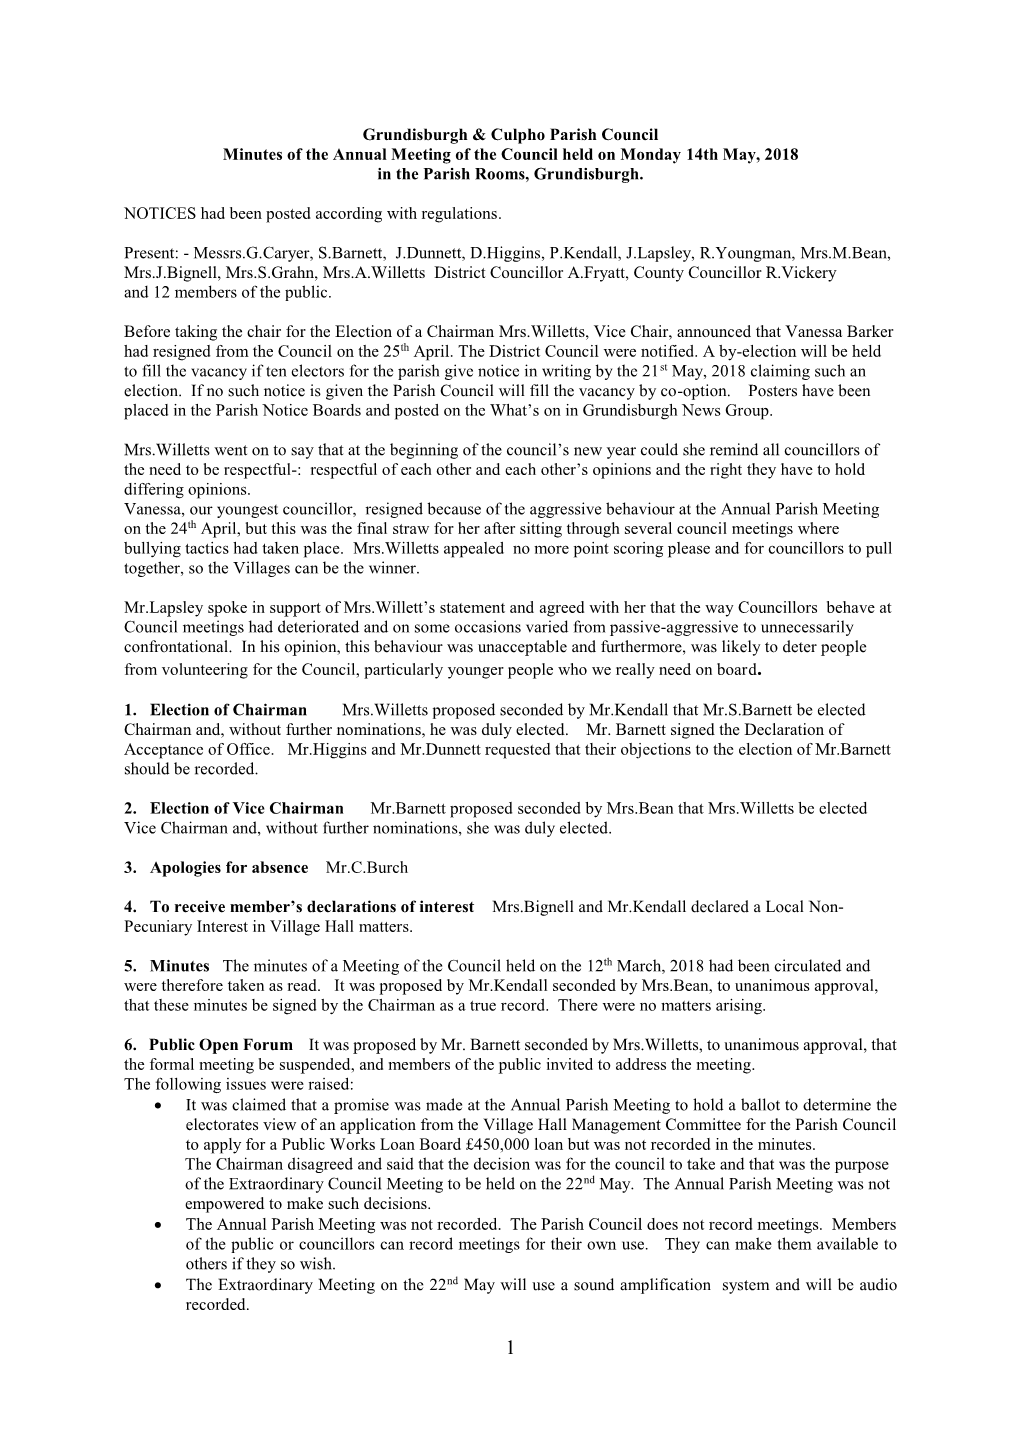 Grundisburgh & Culpho Parish Council Minutes of the Annual